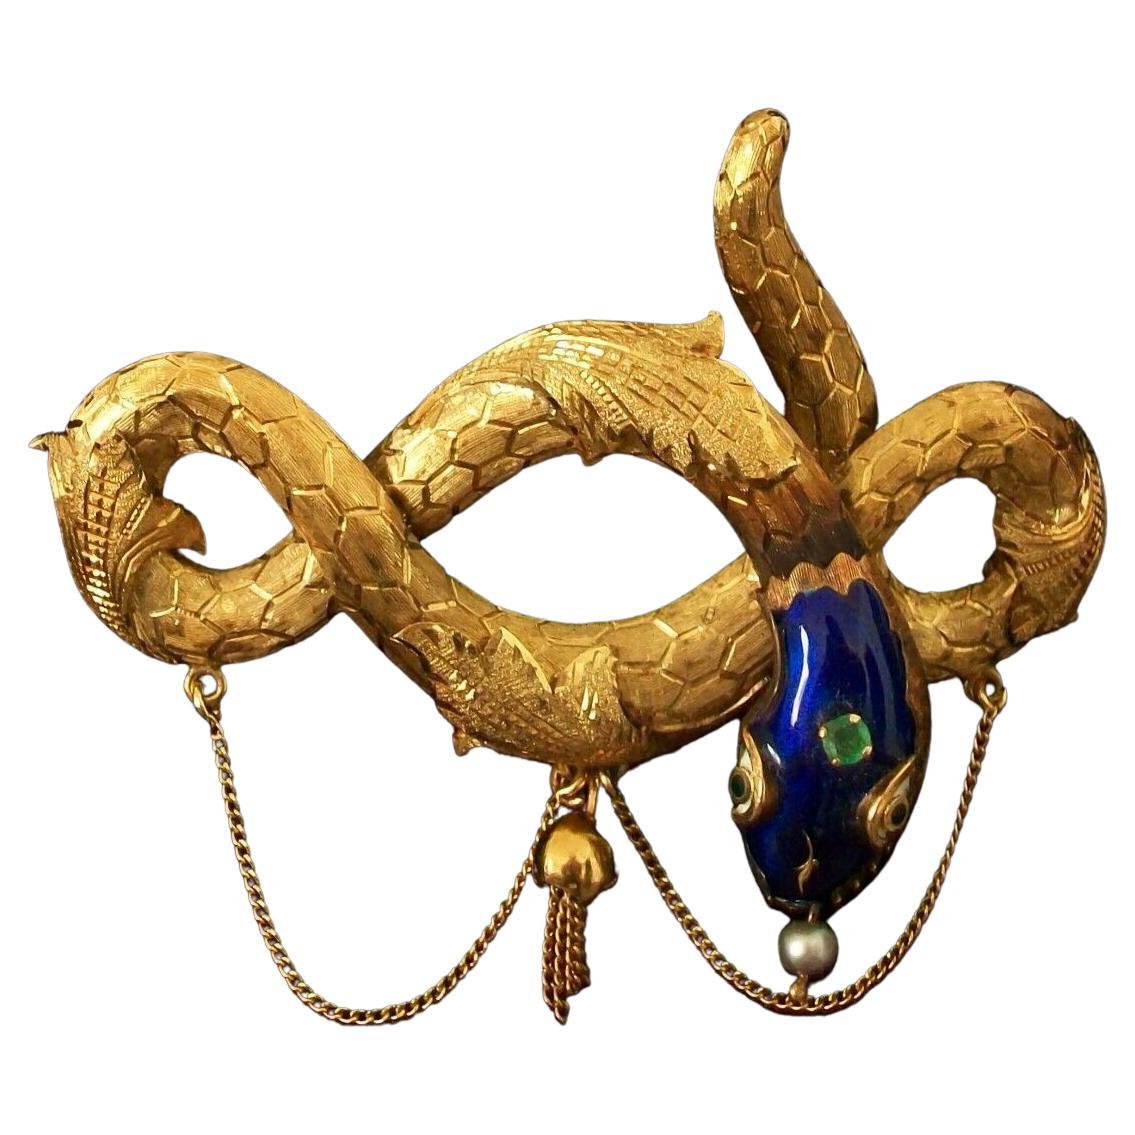 Antique 18K Gold & Enamel Snake Brooch, Emerald & Pearl, France, Circa 1880